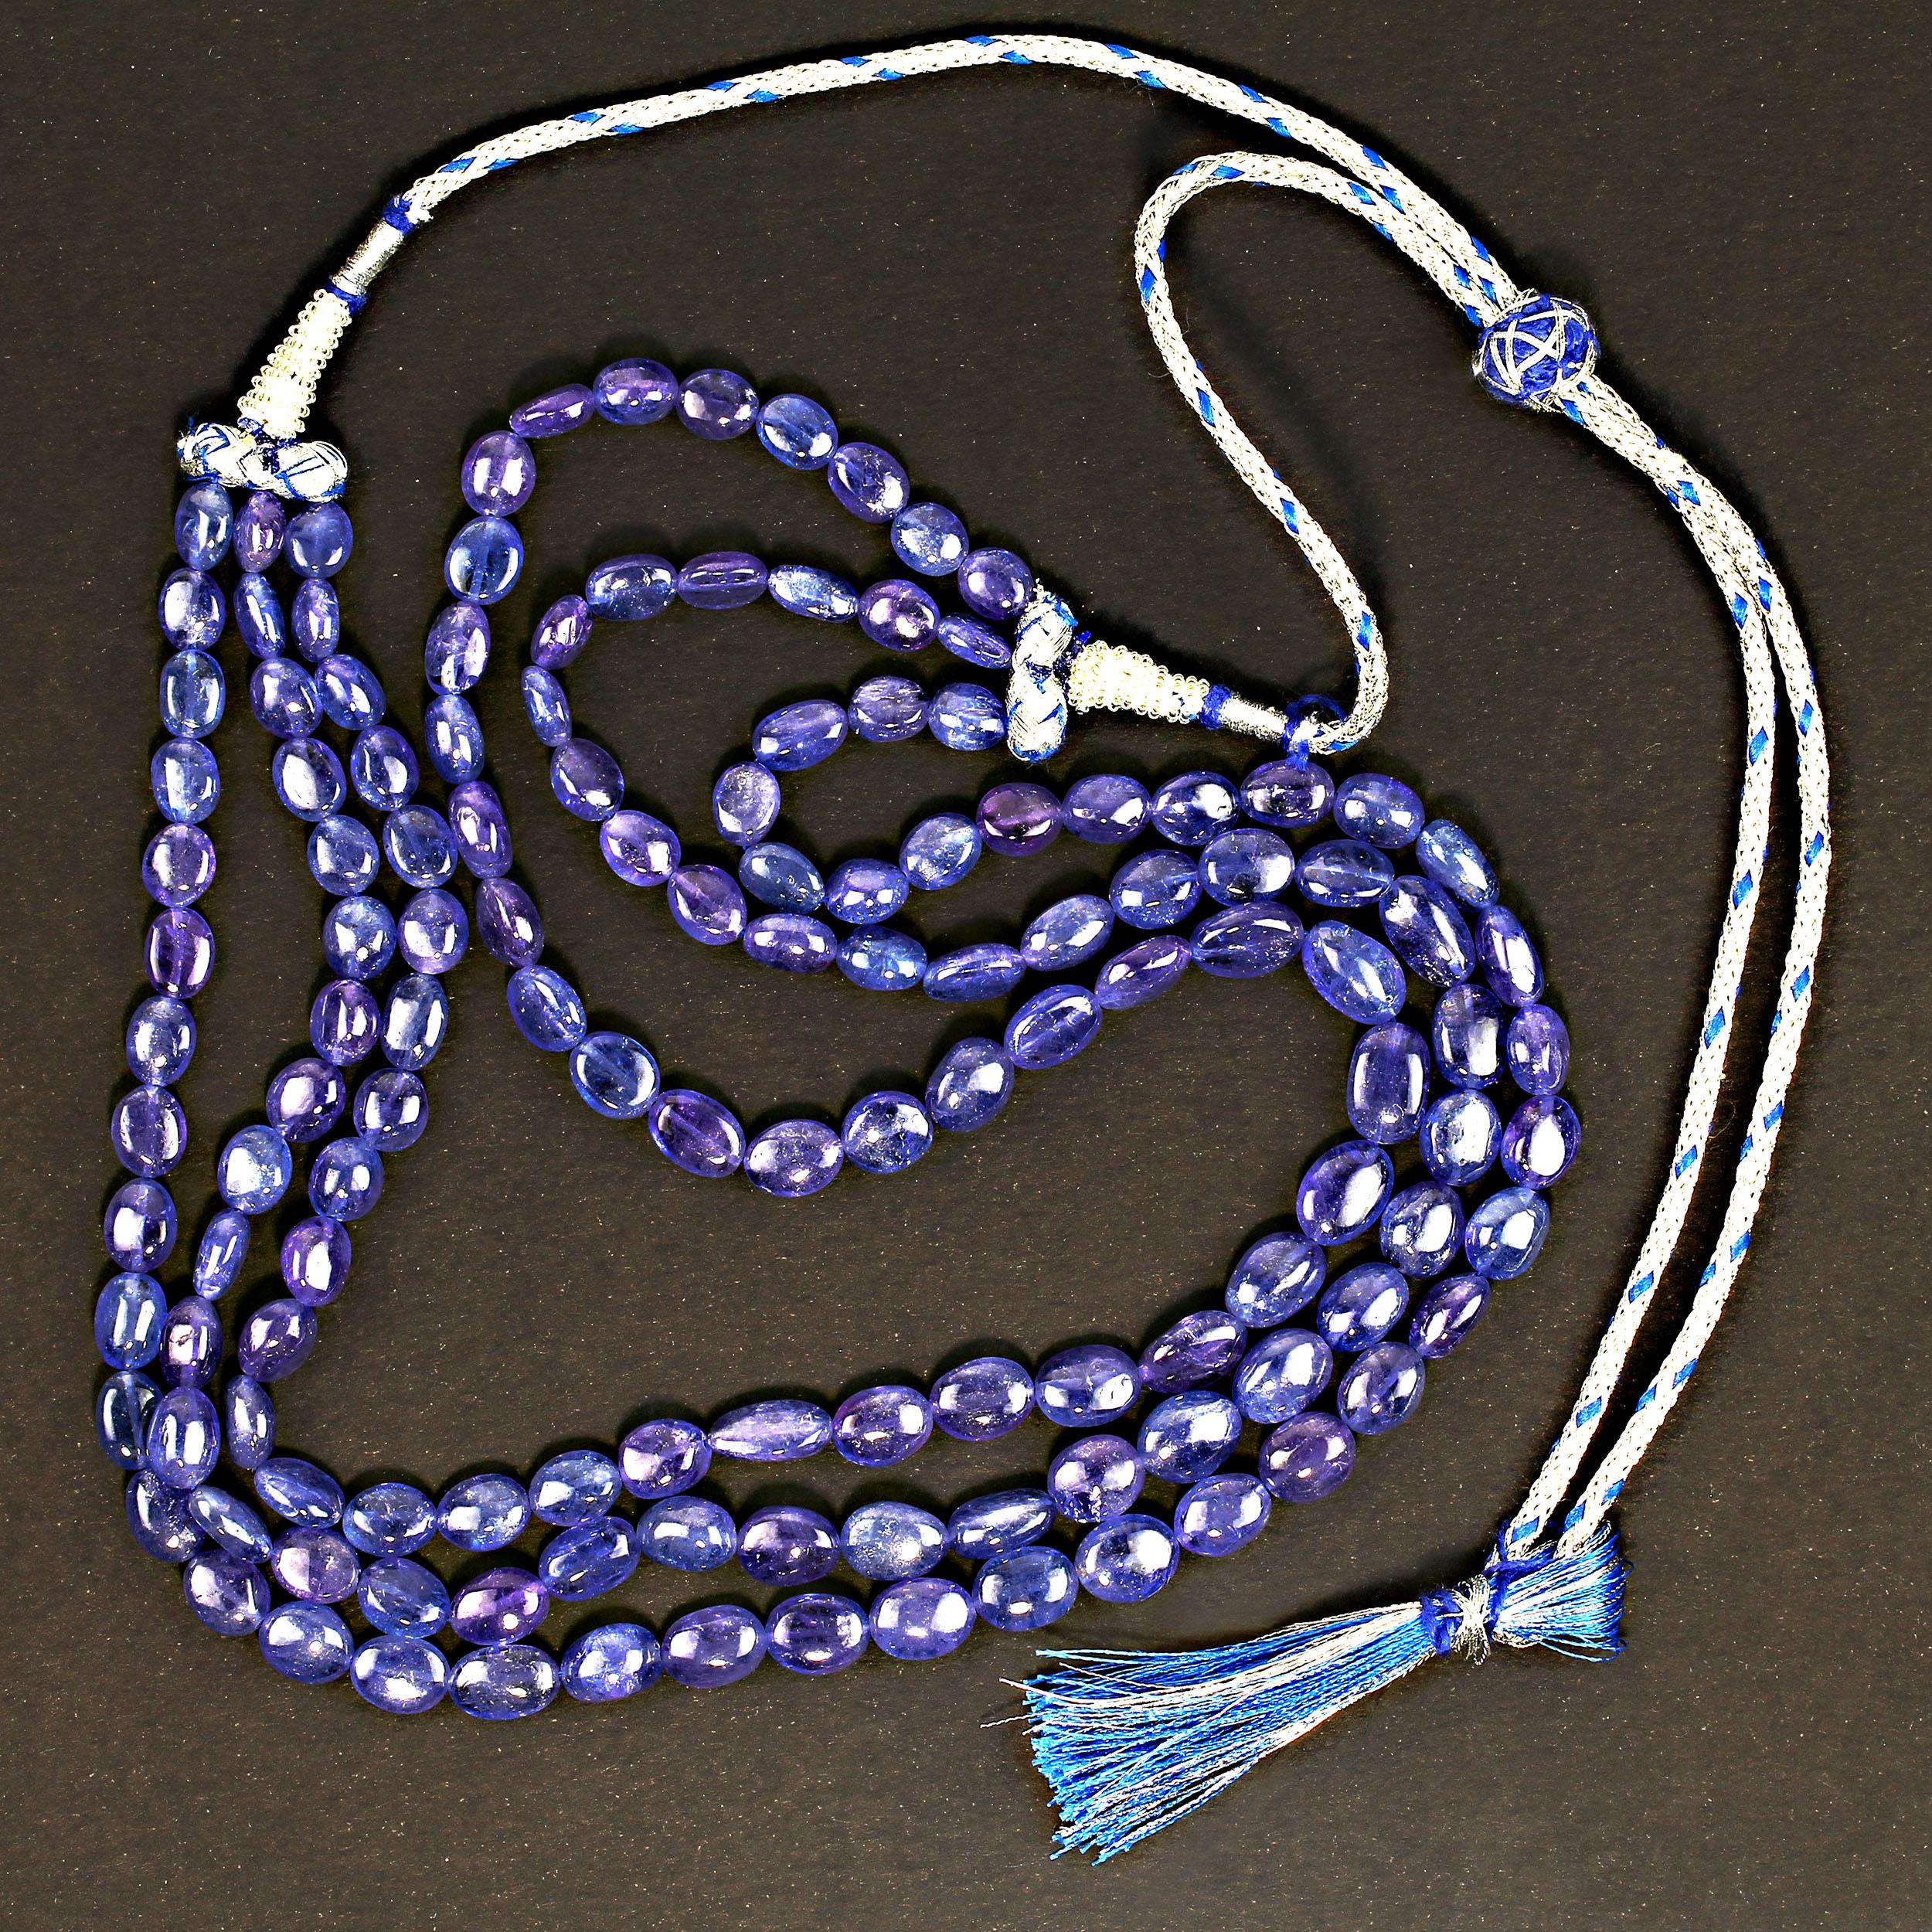 18 inch necklaces